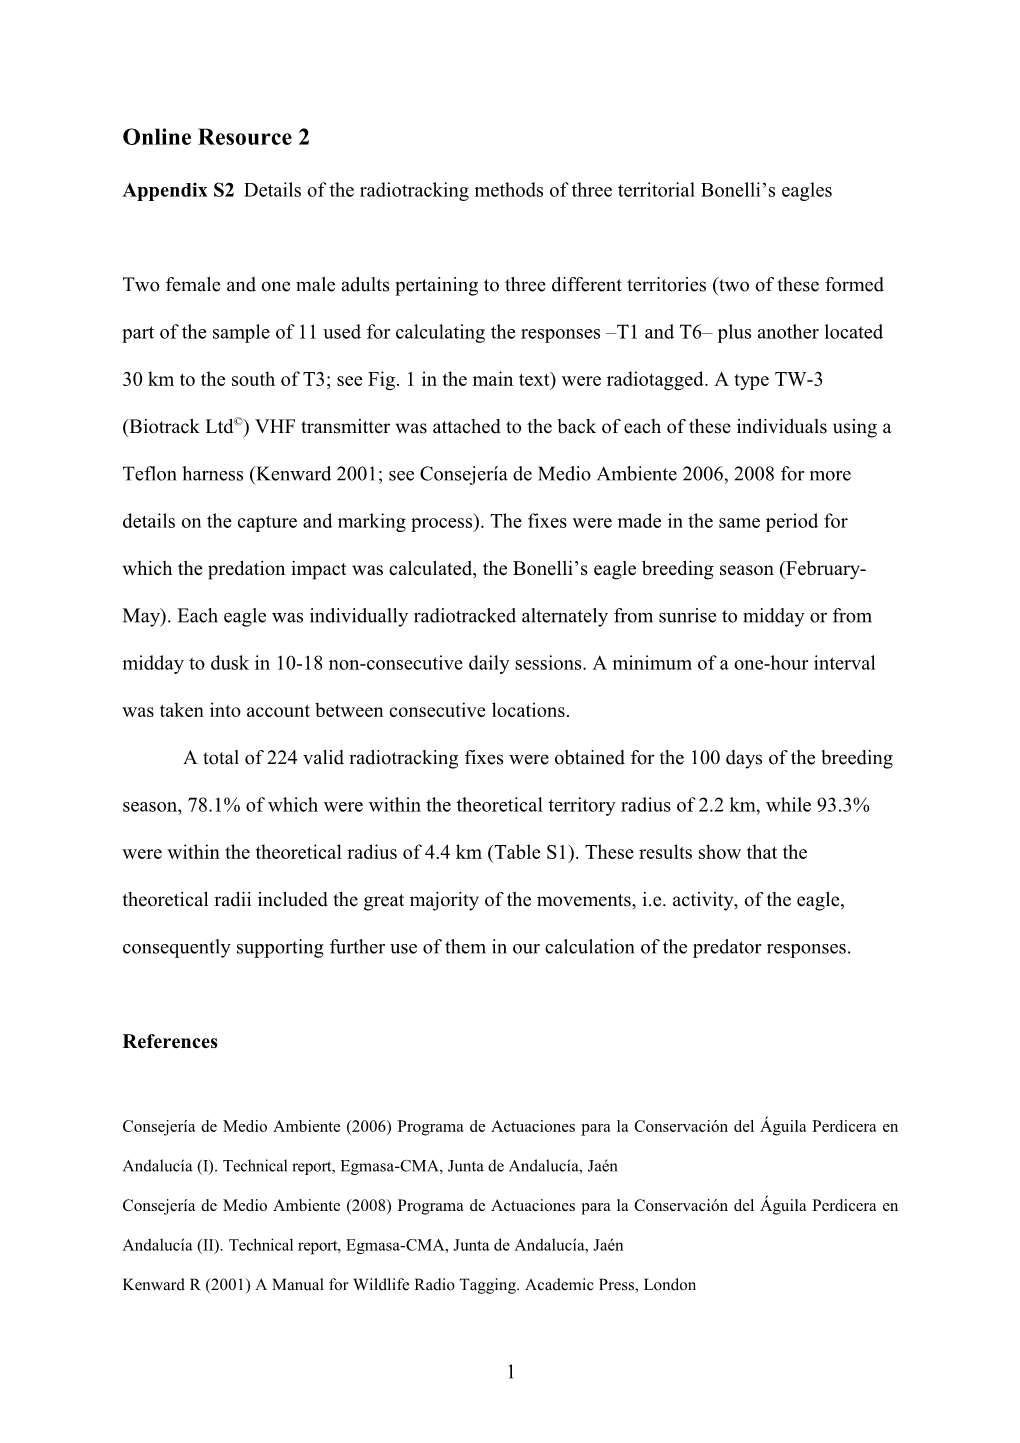 Appendix S2 Details of the Radiotracking Methods of Three Territorial Bonelli S Eagles